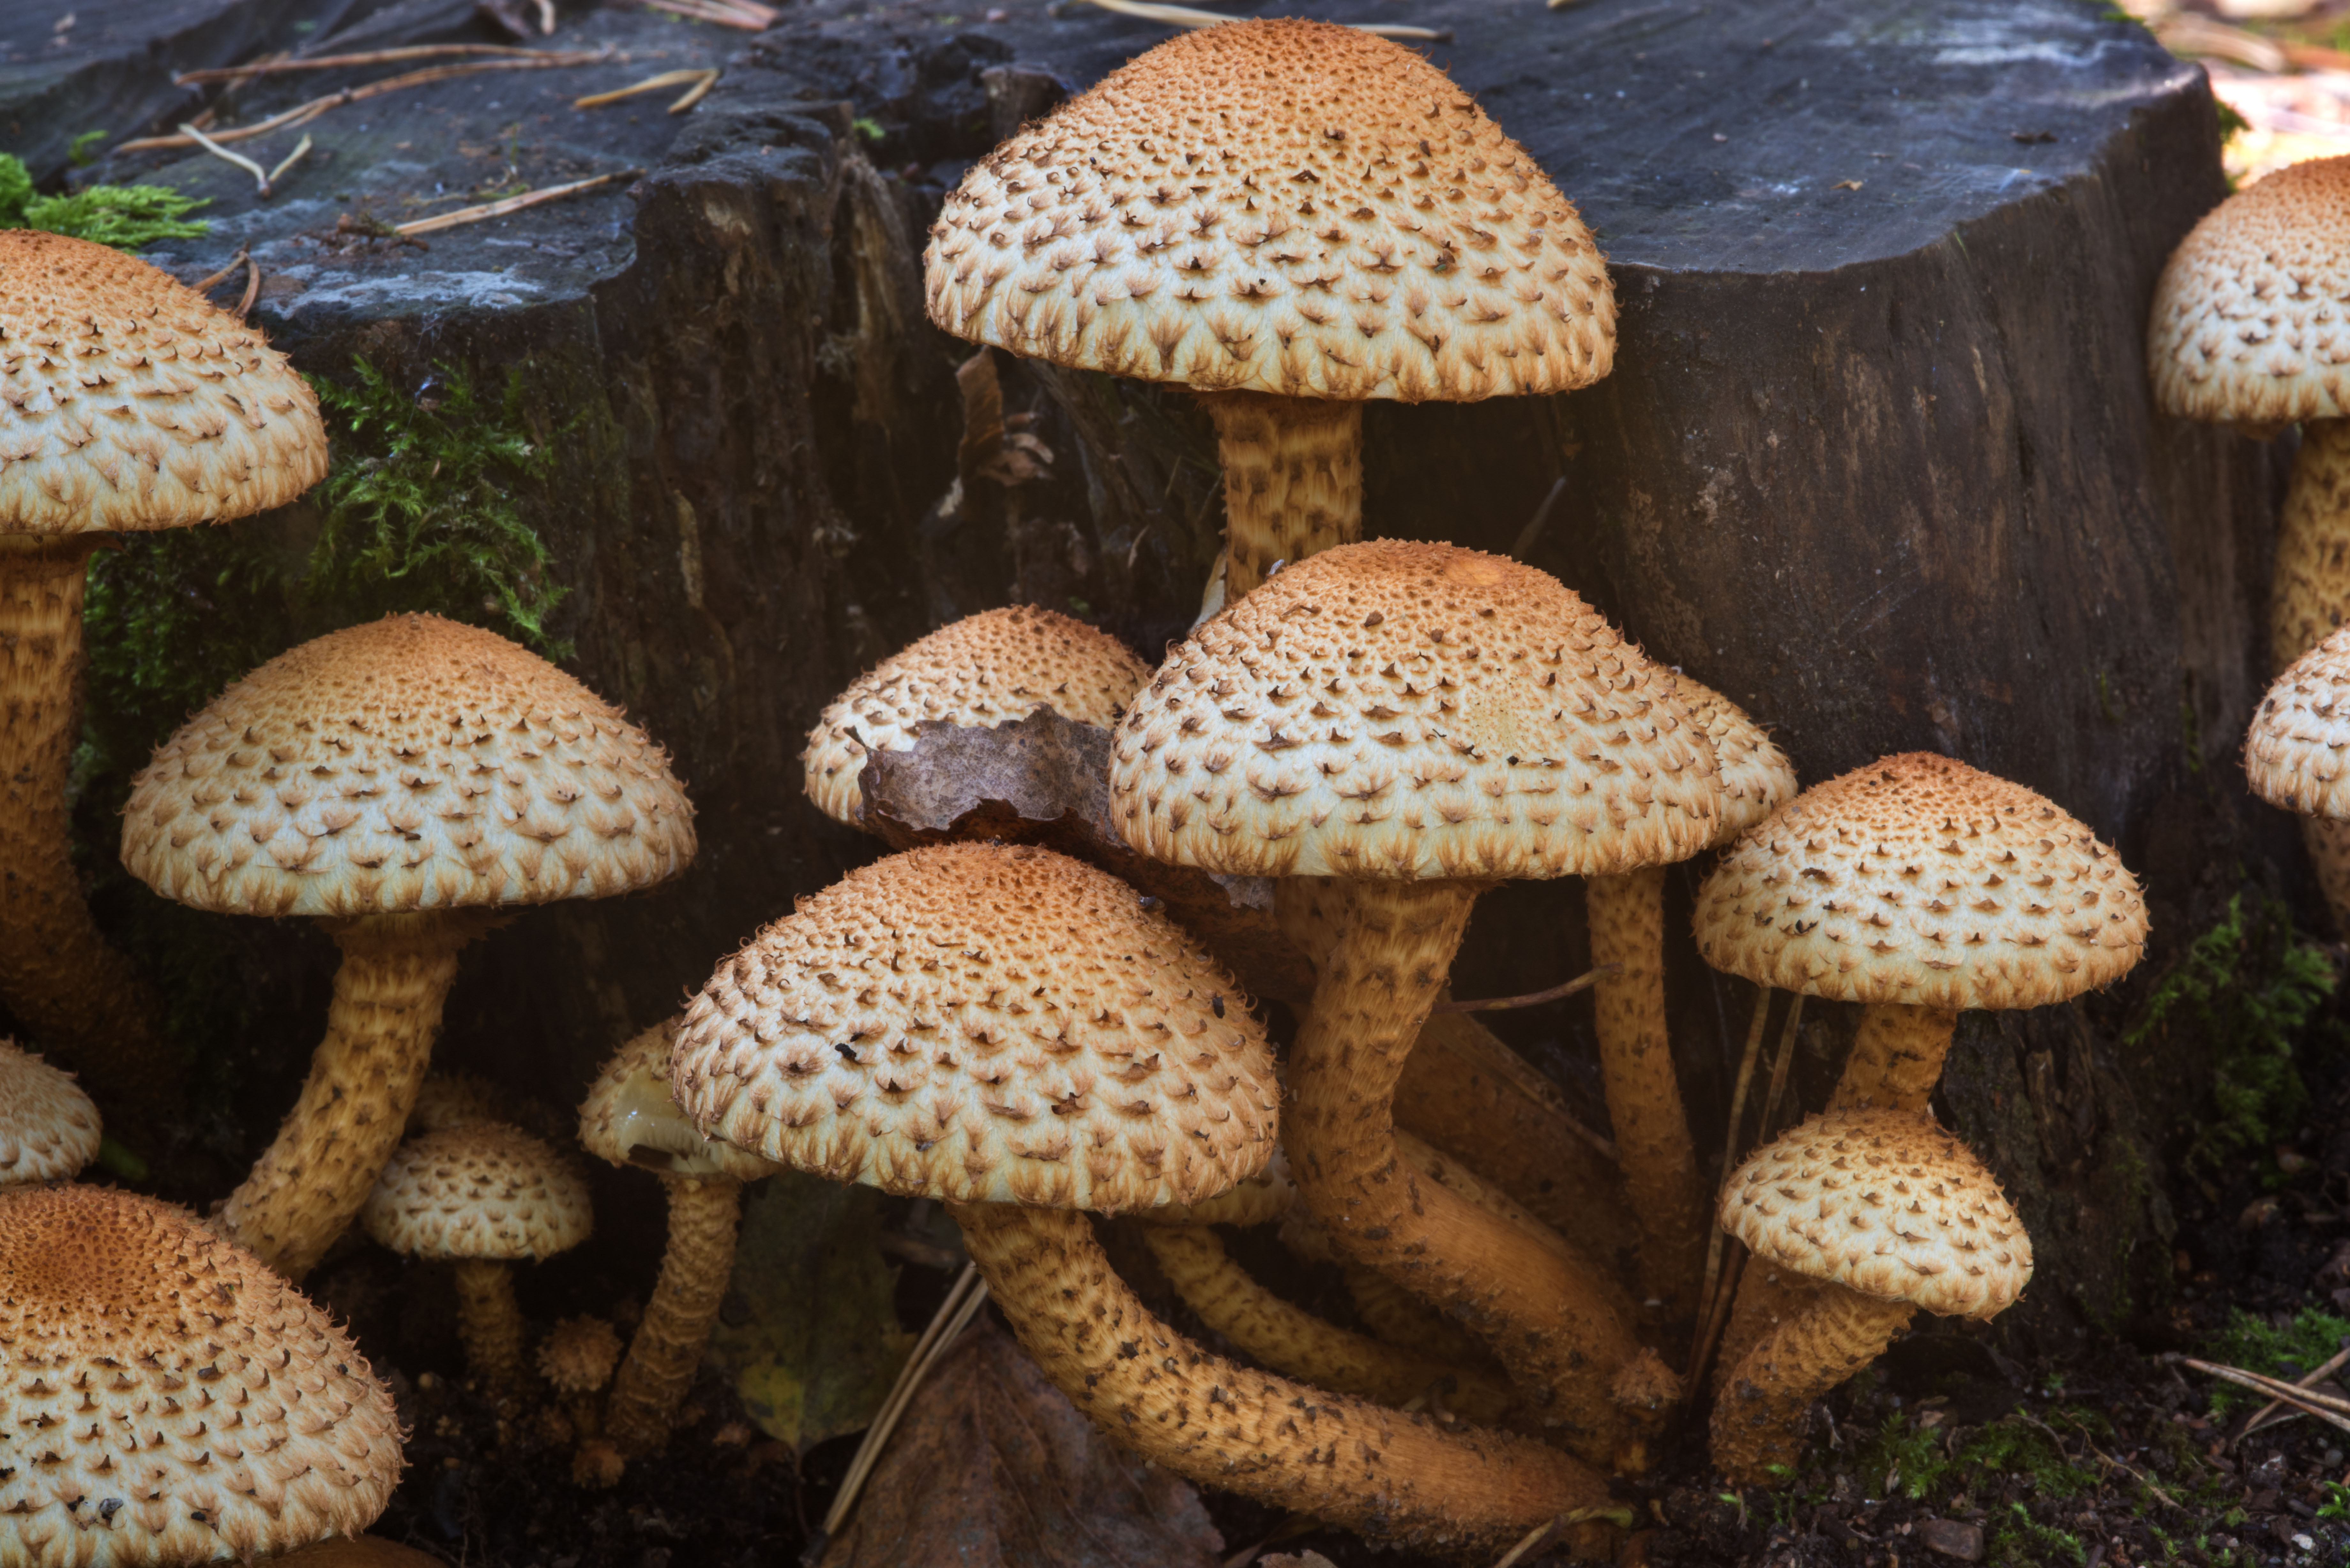 Photo 2165-28: Shaggy scalycap mushrooms (Pholiota squarrosa) on ...